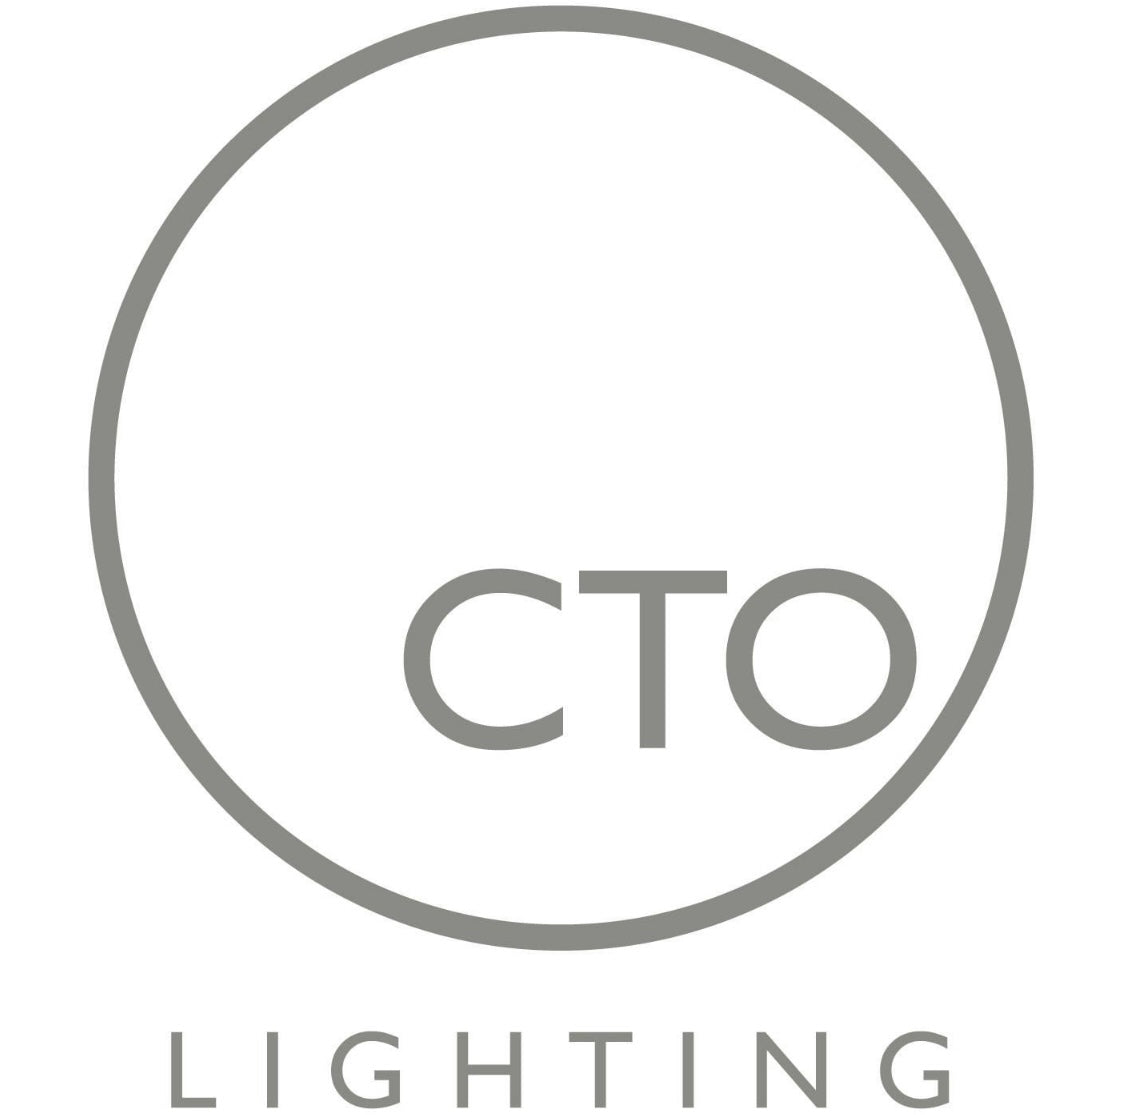 Cto Lighting